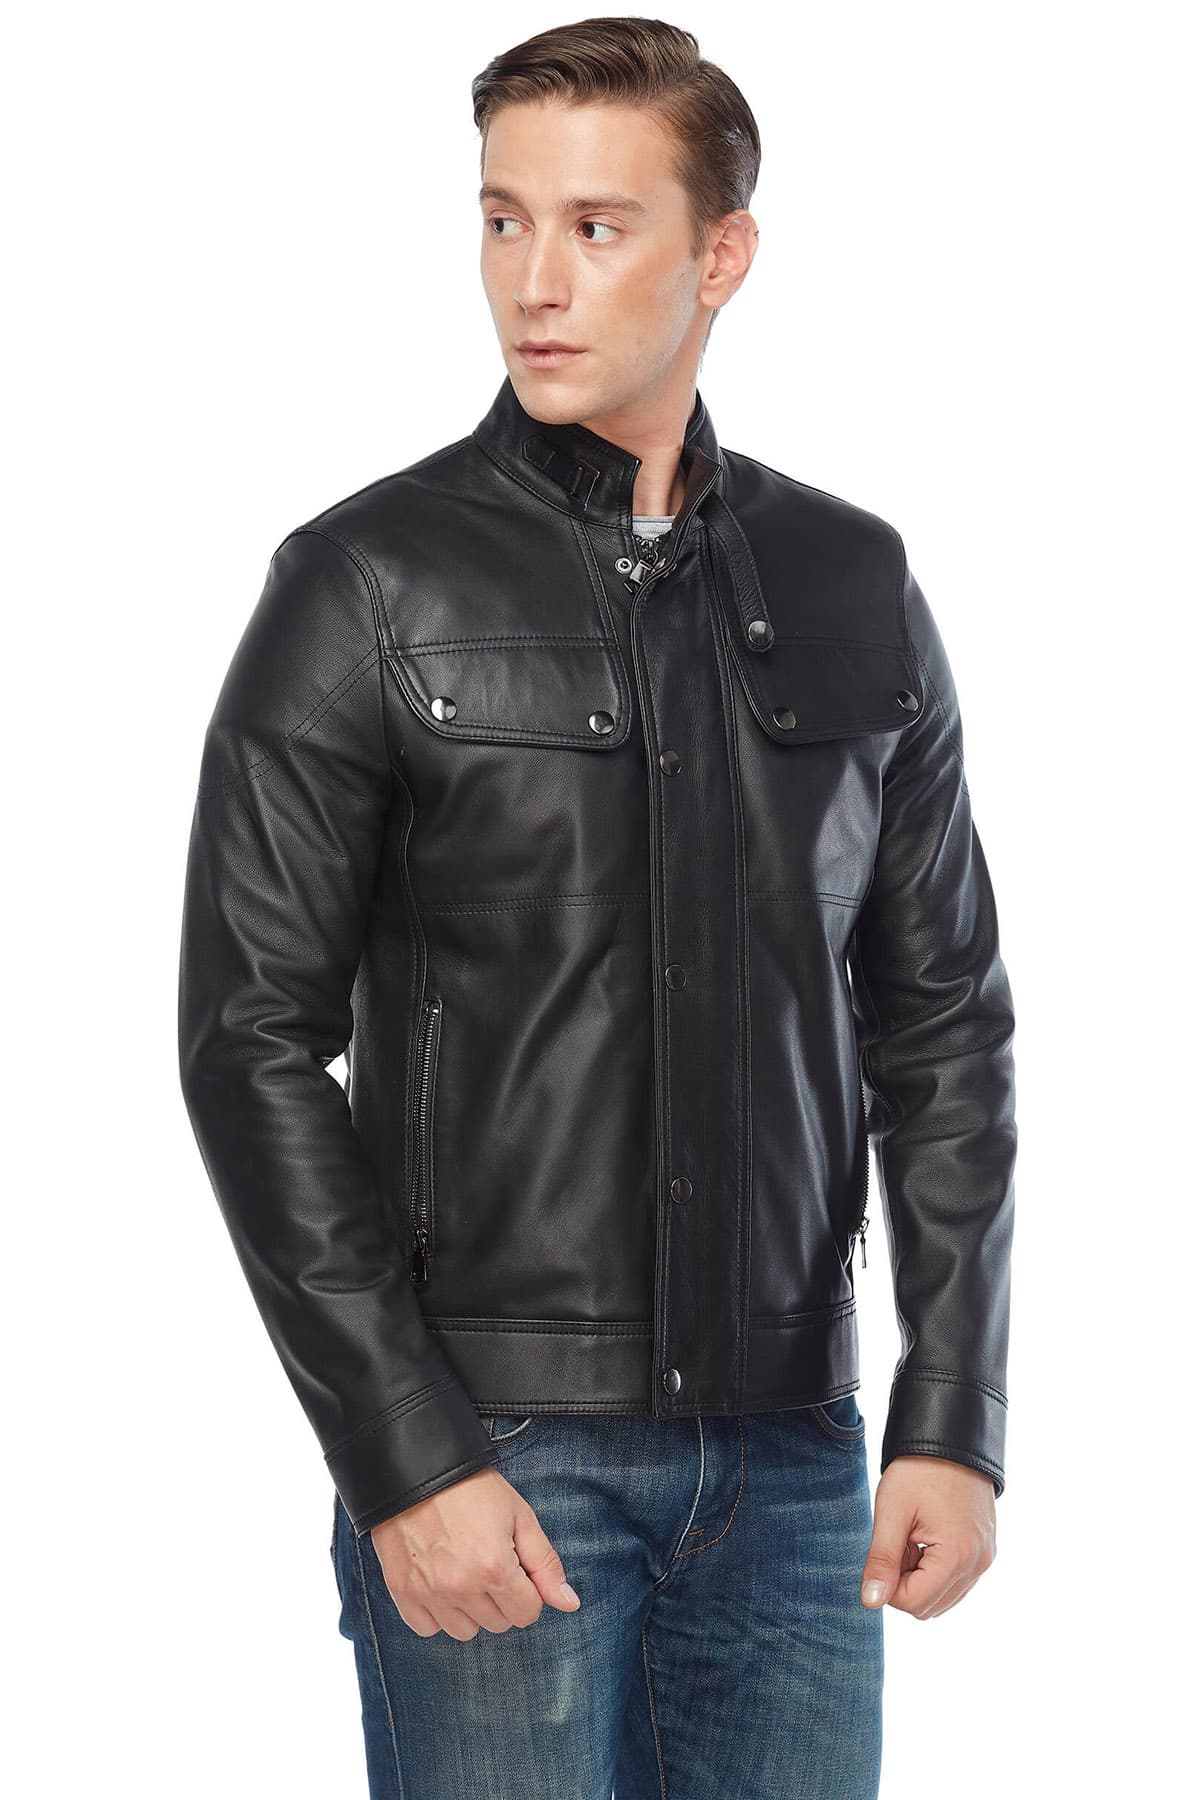 David Beckham Genuine Leather Coat Black3